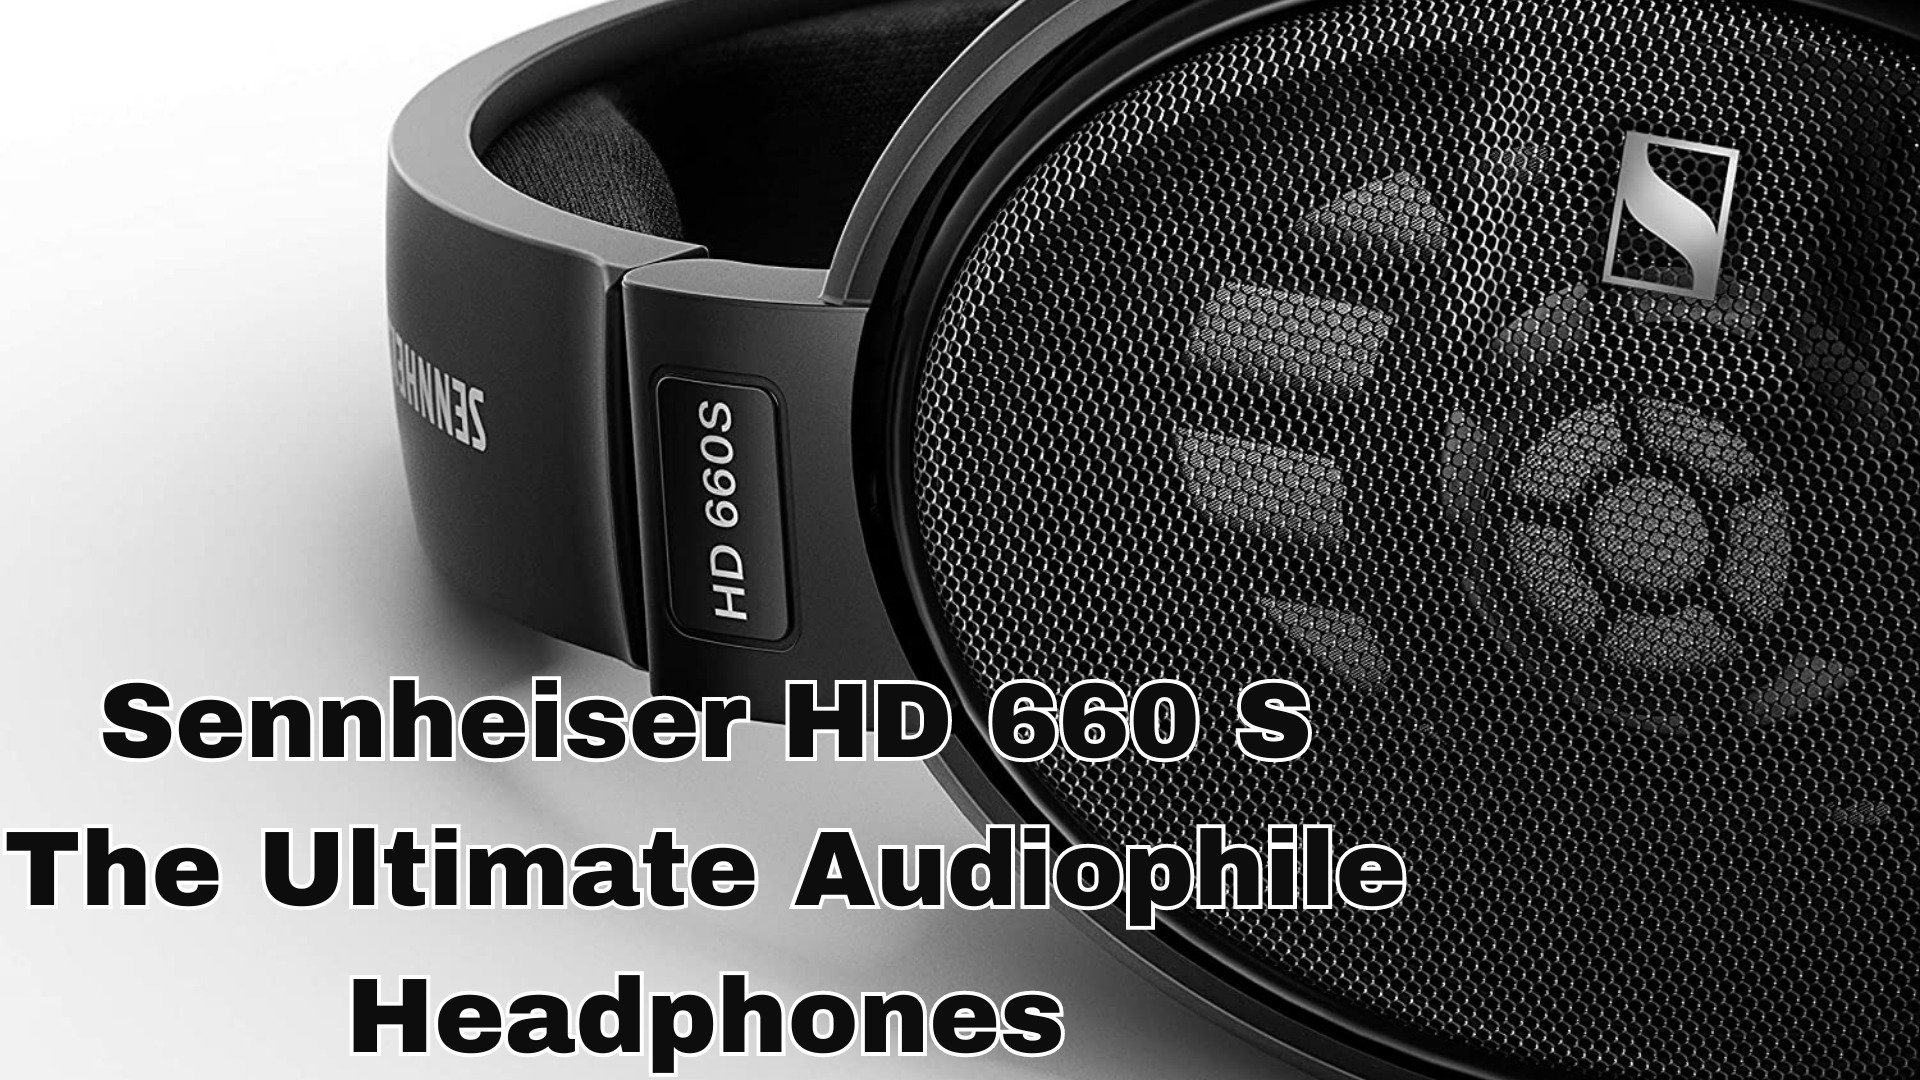 Sennheiser HD 660 S review – The Ultimate Audiophile Headphones